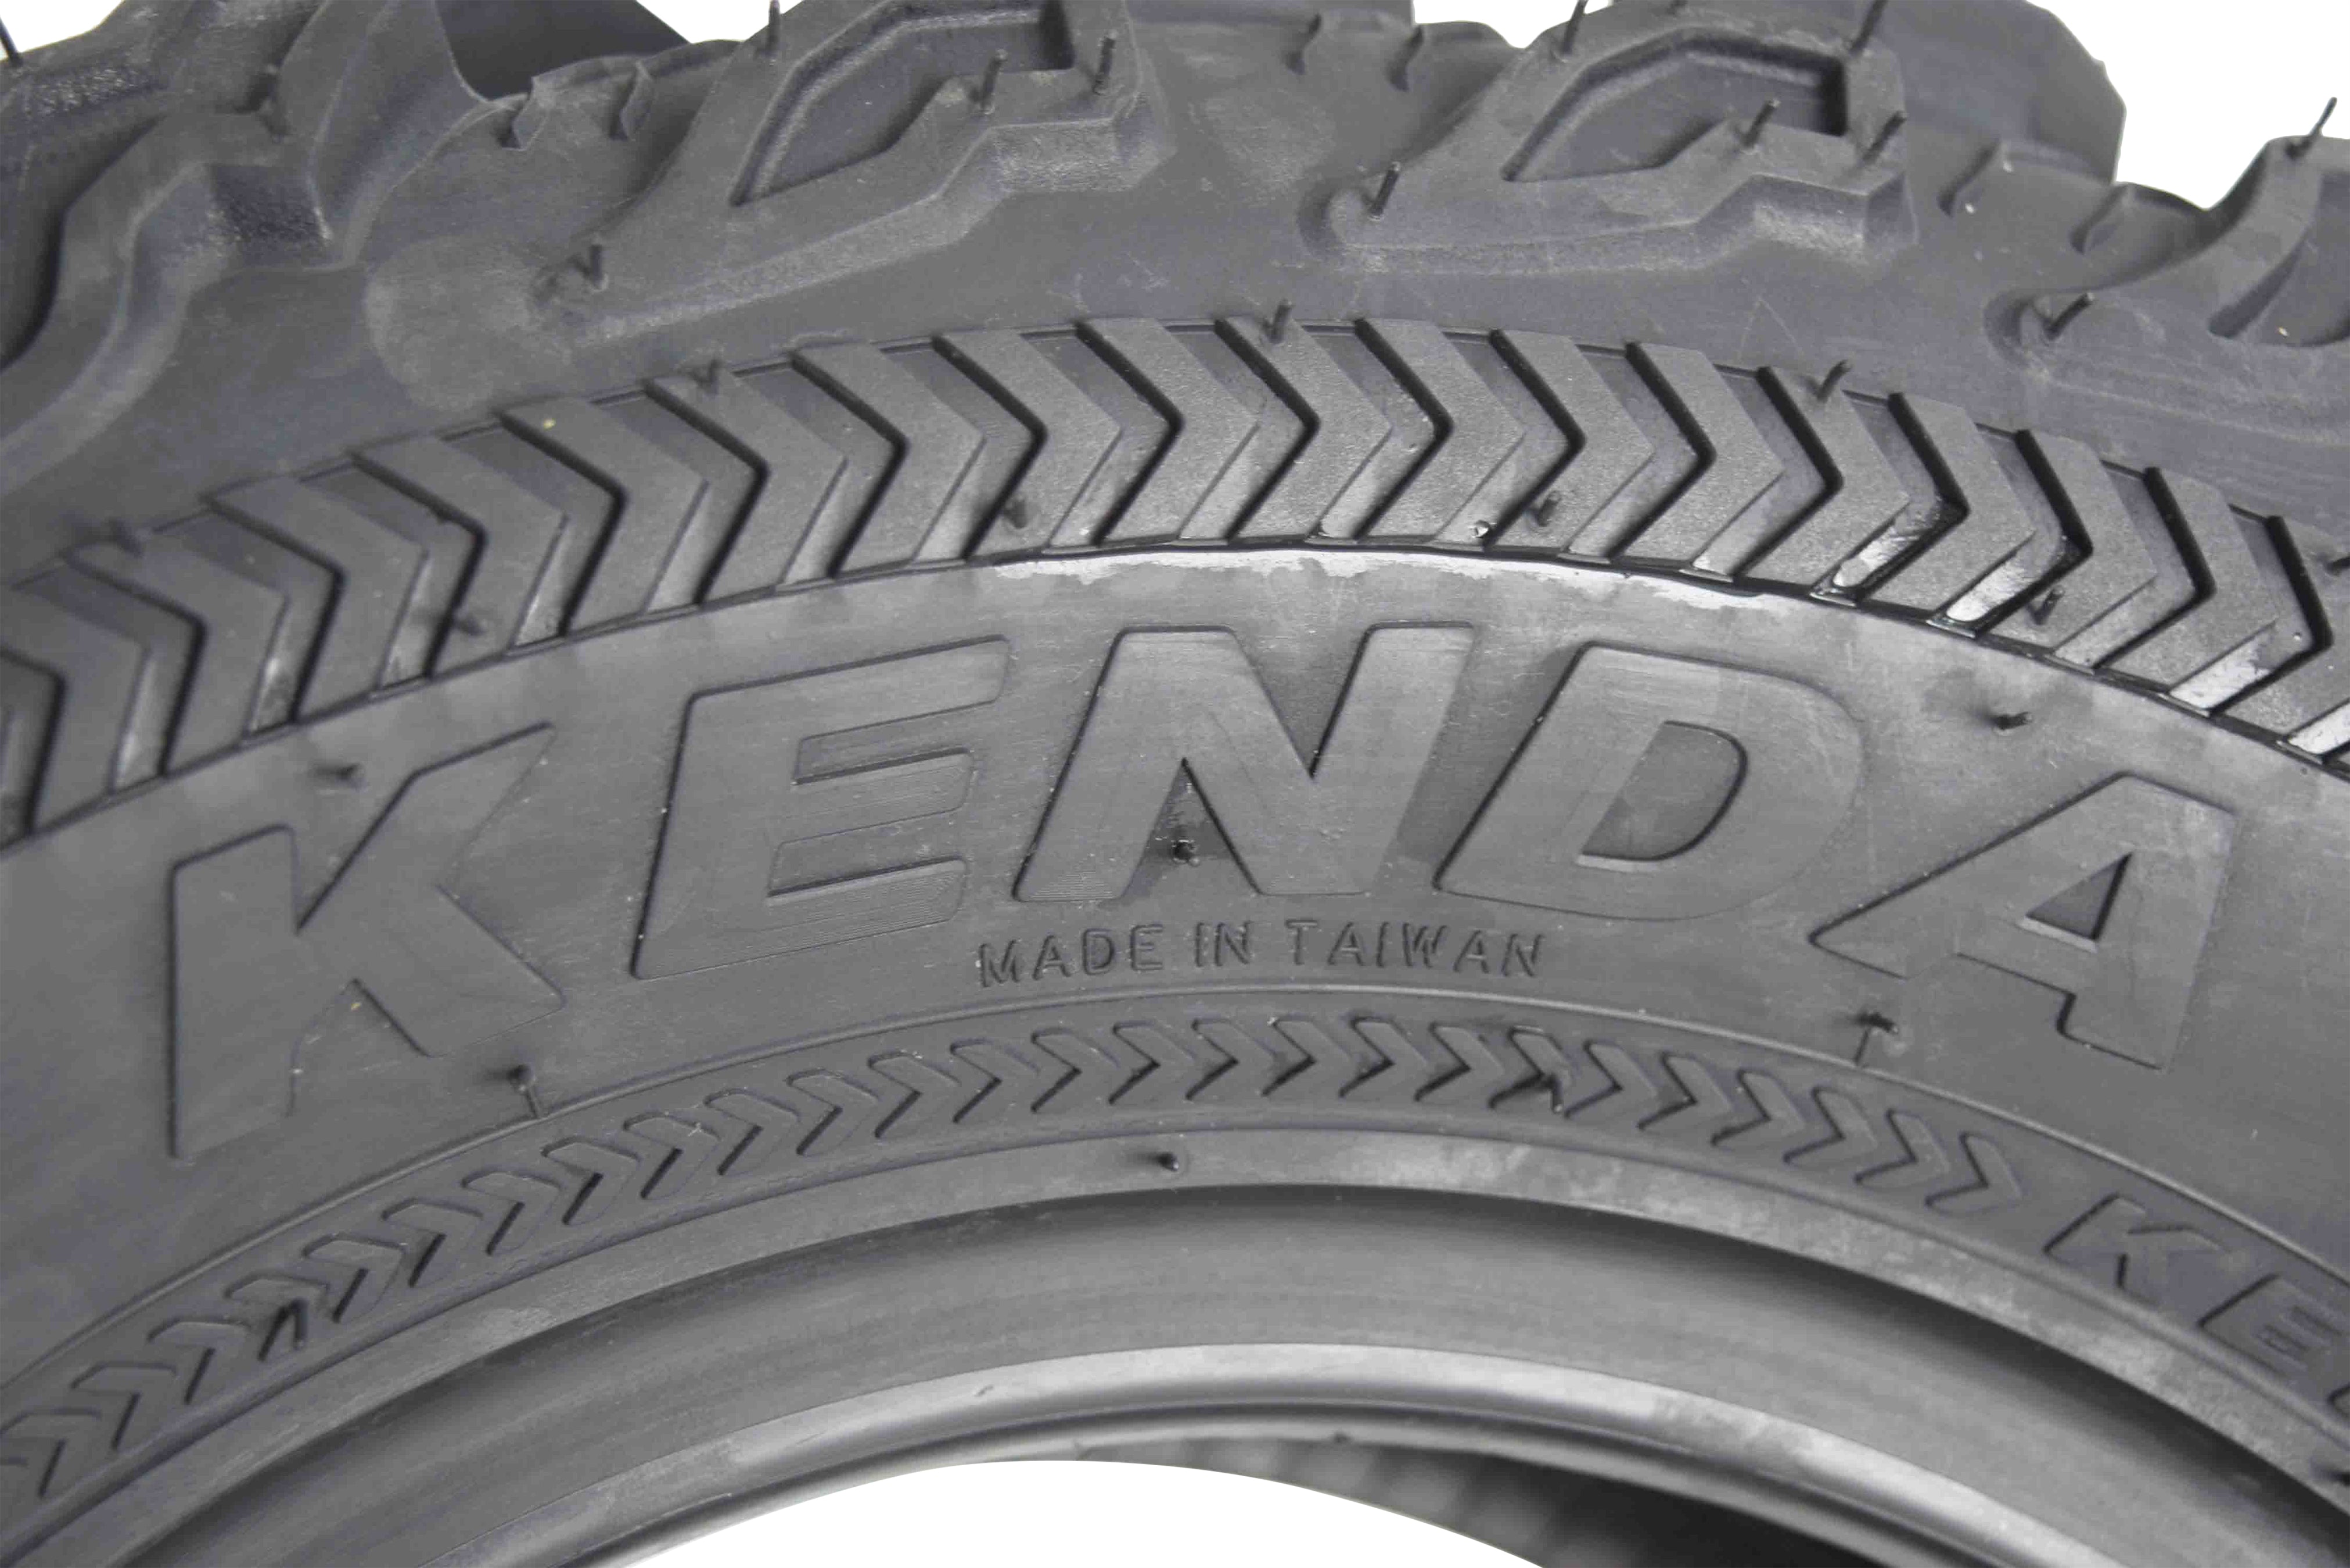 Kenda Bear Claw EX 21x7-10 Front 6 PLY ATV Tire Bearclaw 21x7x10 Single Tire